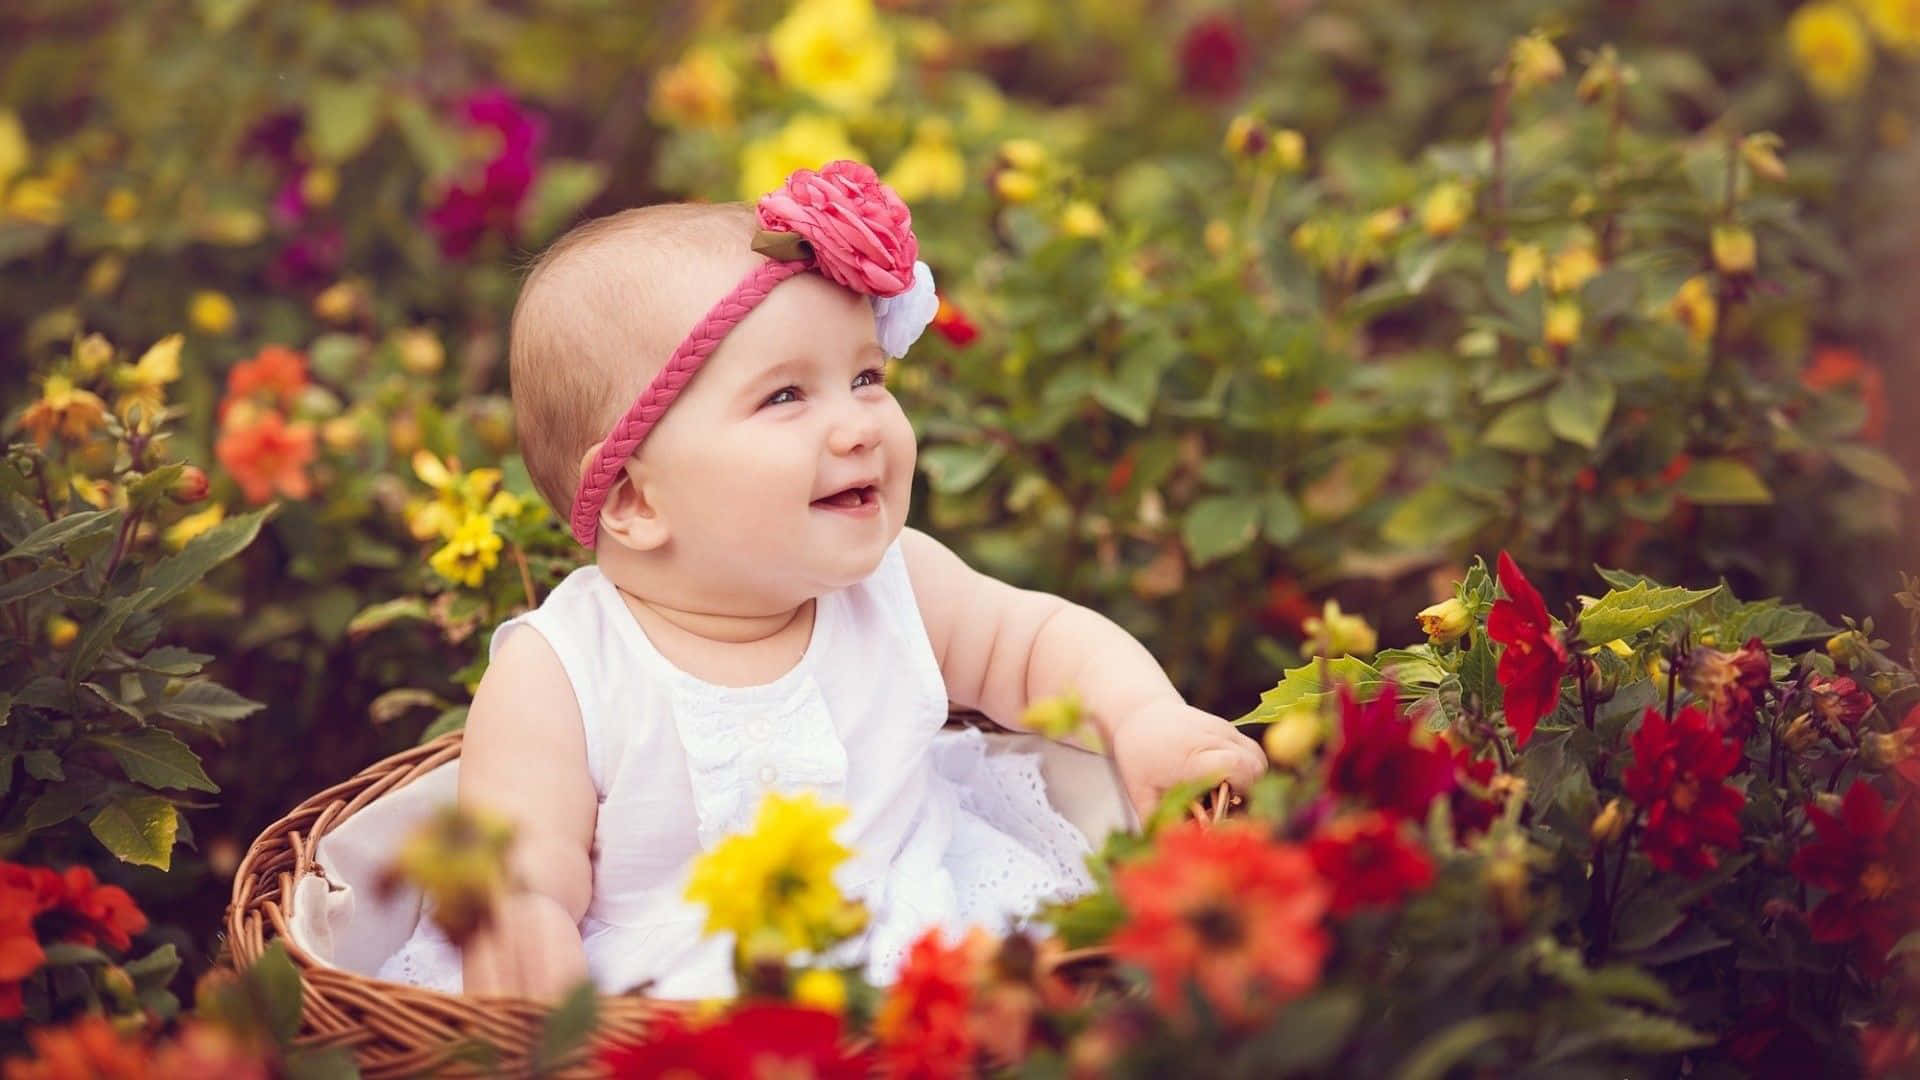 A sweet little baby girl smiles innocently